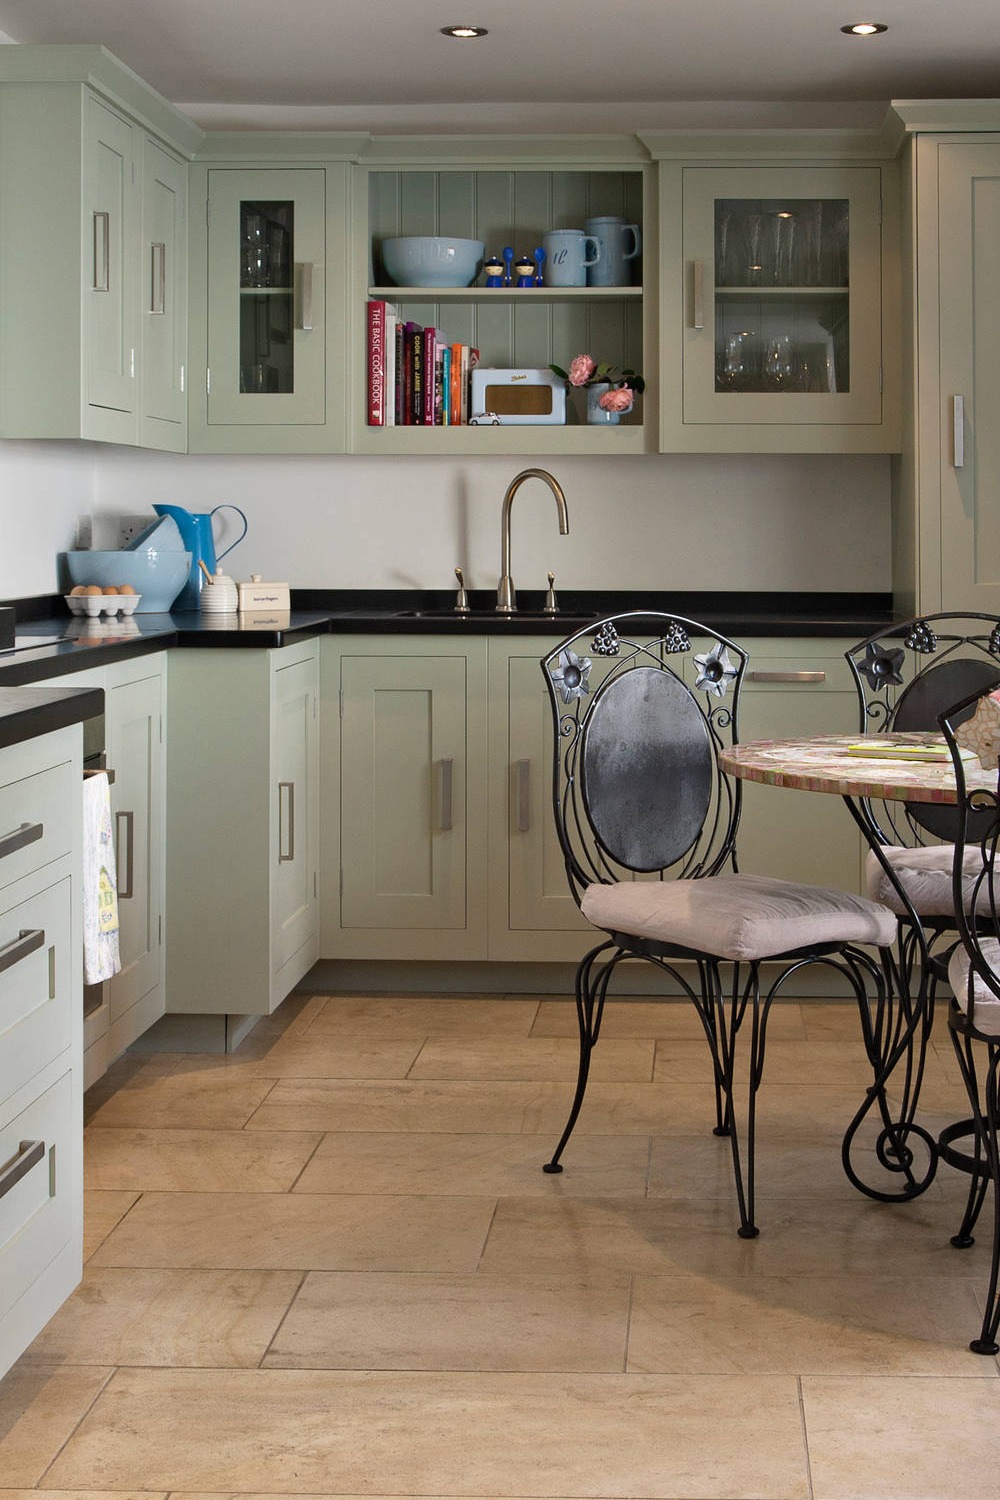 Green Cabinets Save Cart Add Black Countertops Kitchen Shaker Travertine Floor